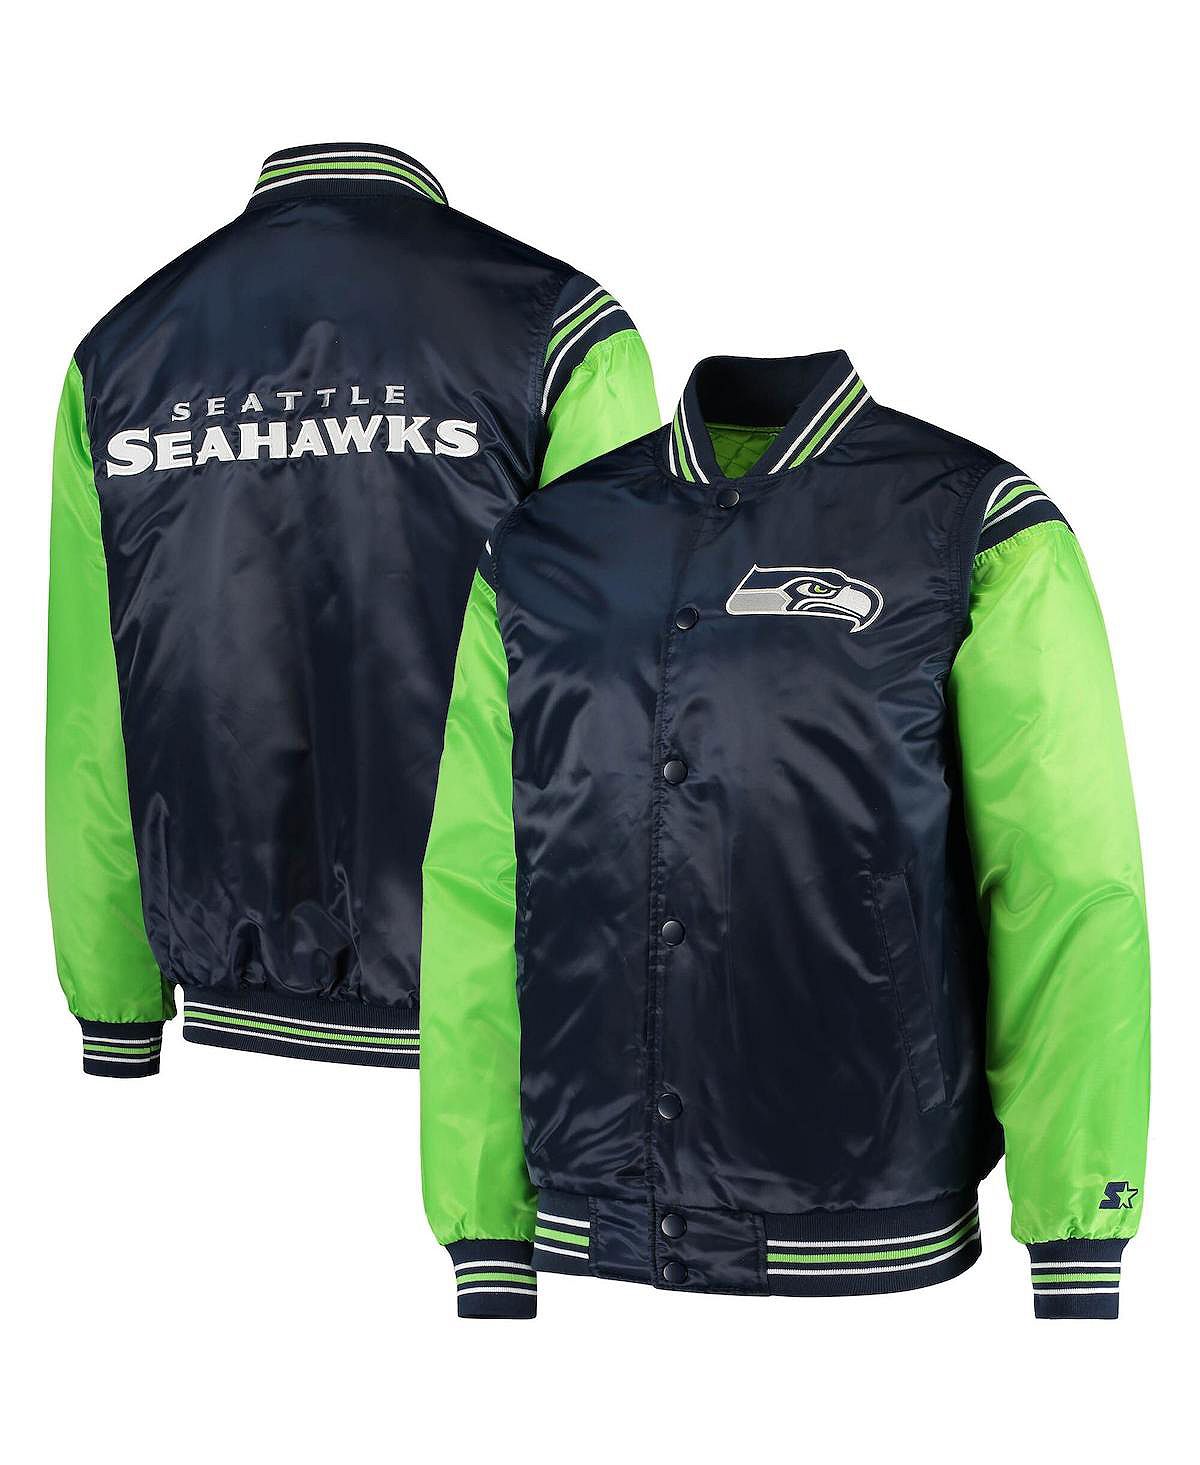 Мужская темно-синяя куртка колледжа, неоново-зеленая атласная университетская куртка seattle seahawks enforcer с застежкой на кнопках Starter, мульти